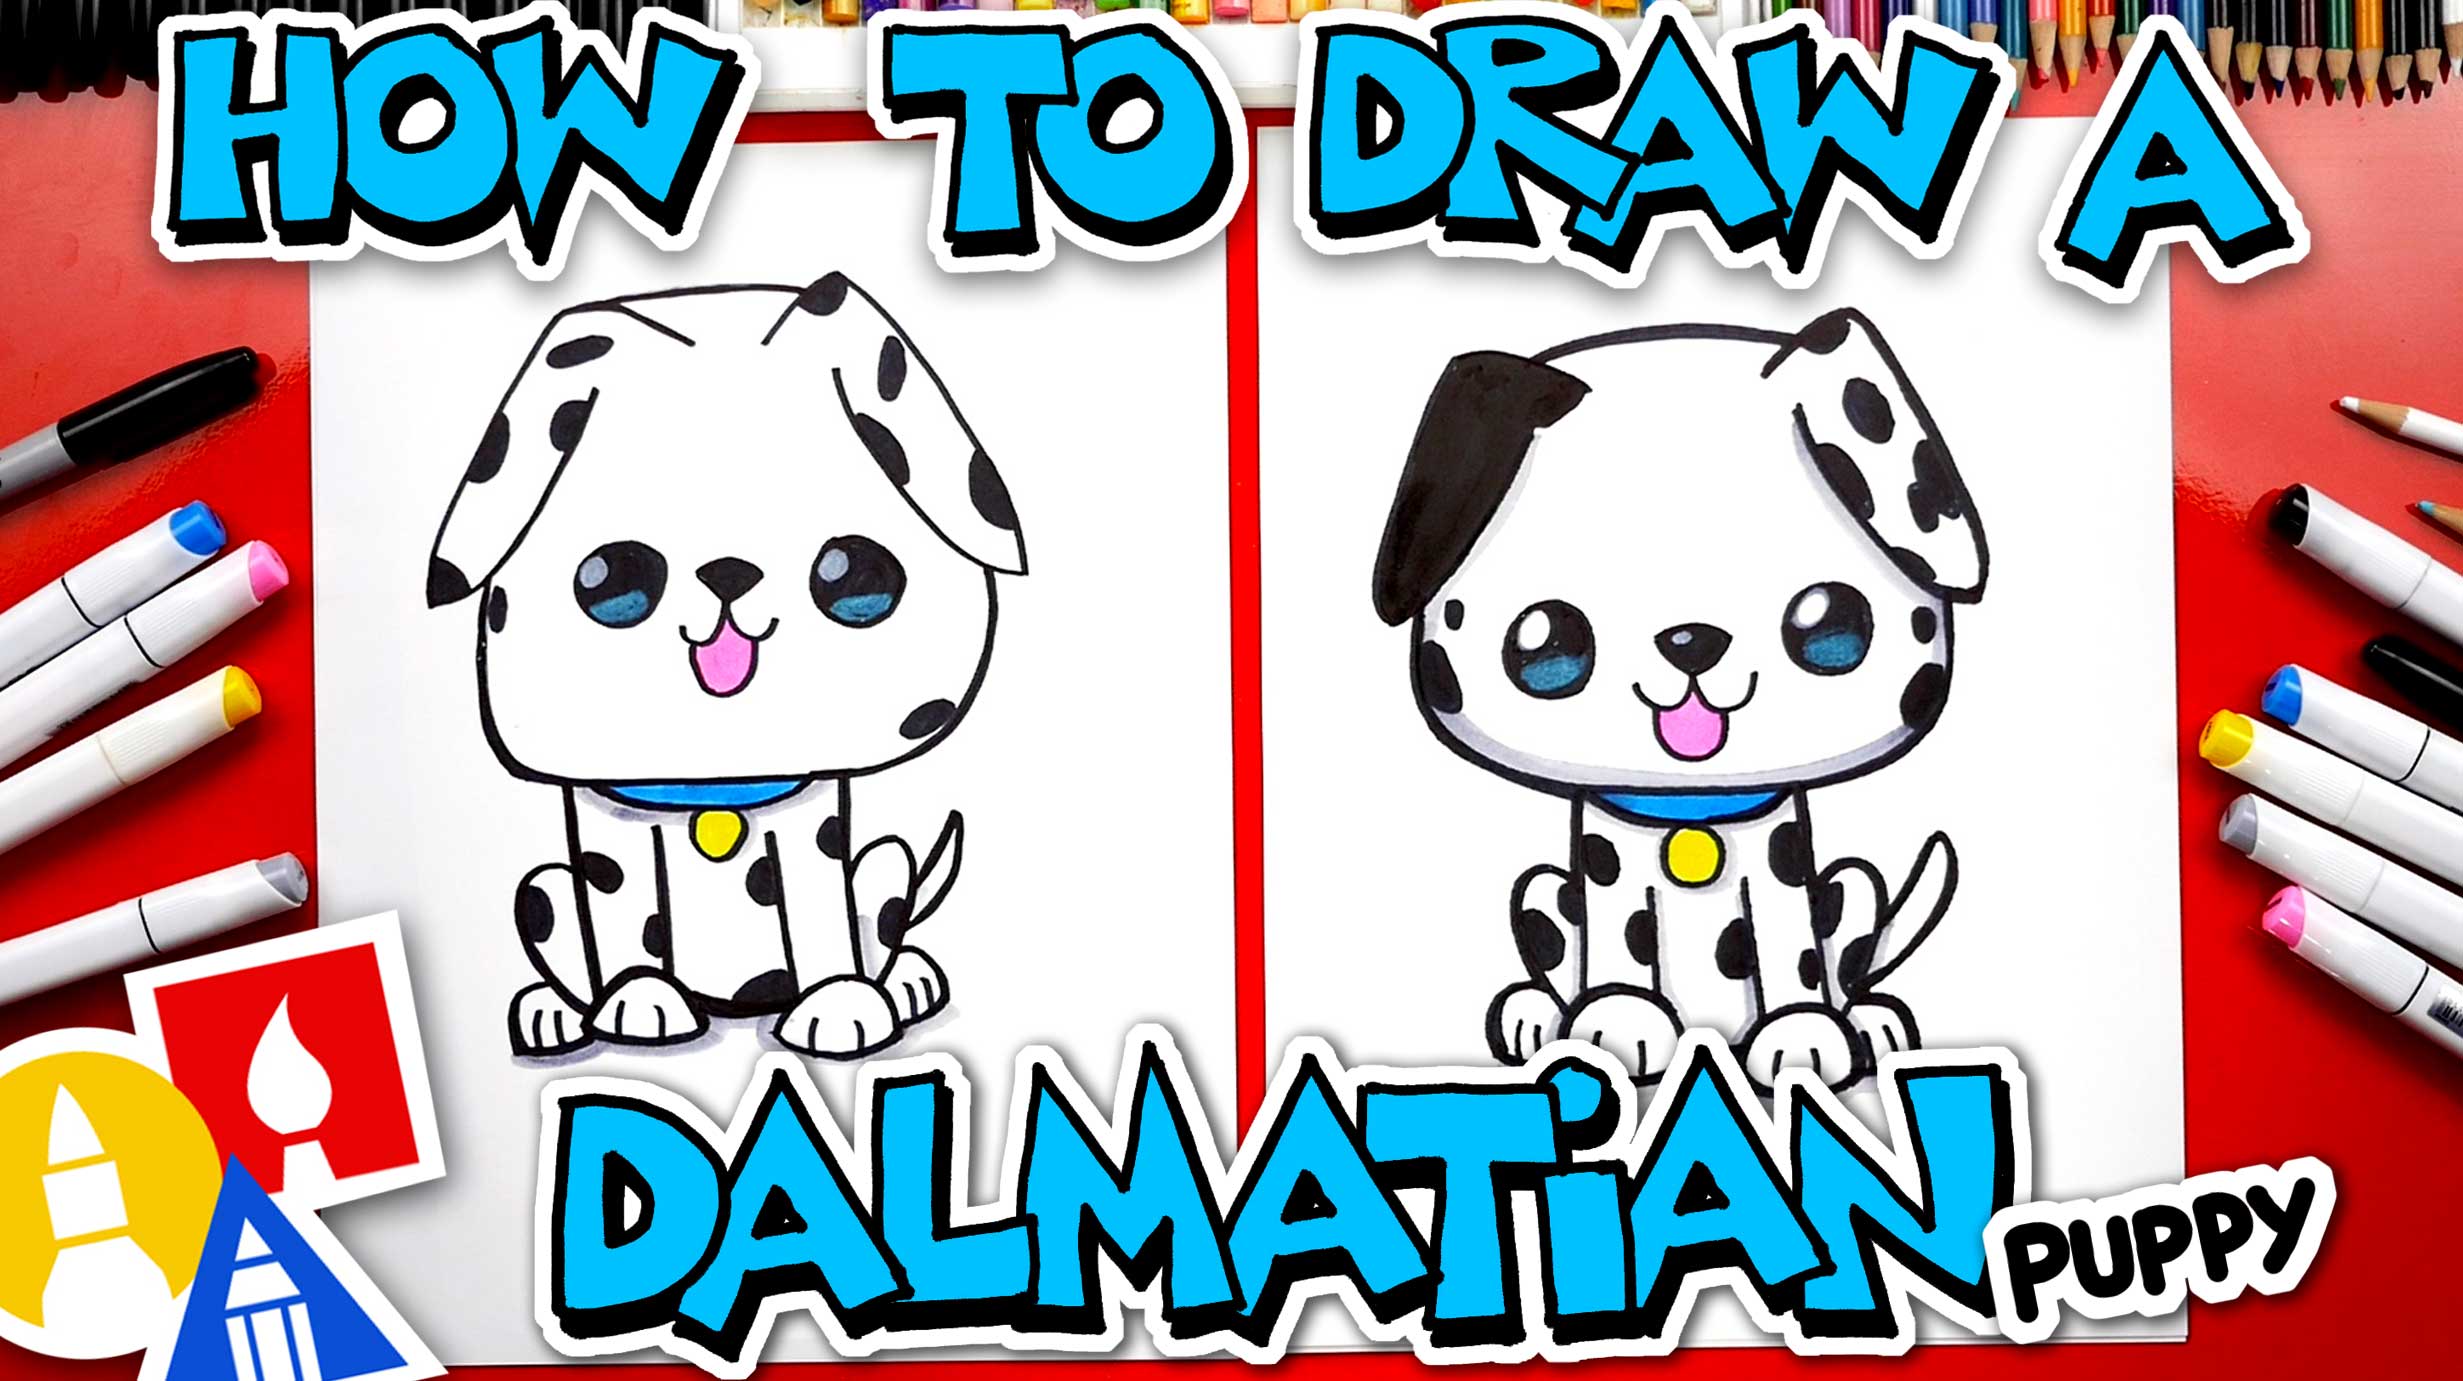 How To Draw A Cartoon Dalmatian Puppy - Art For Kids Hub -